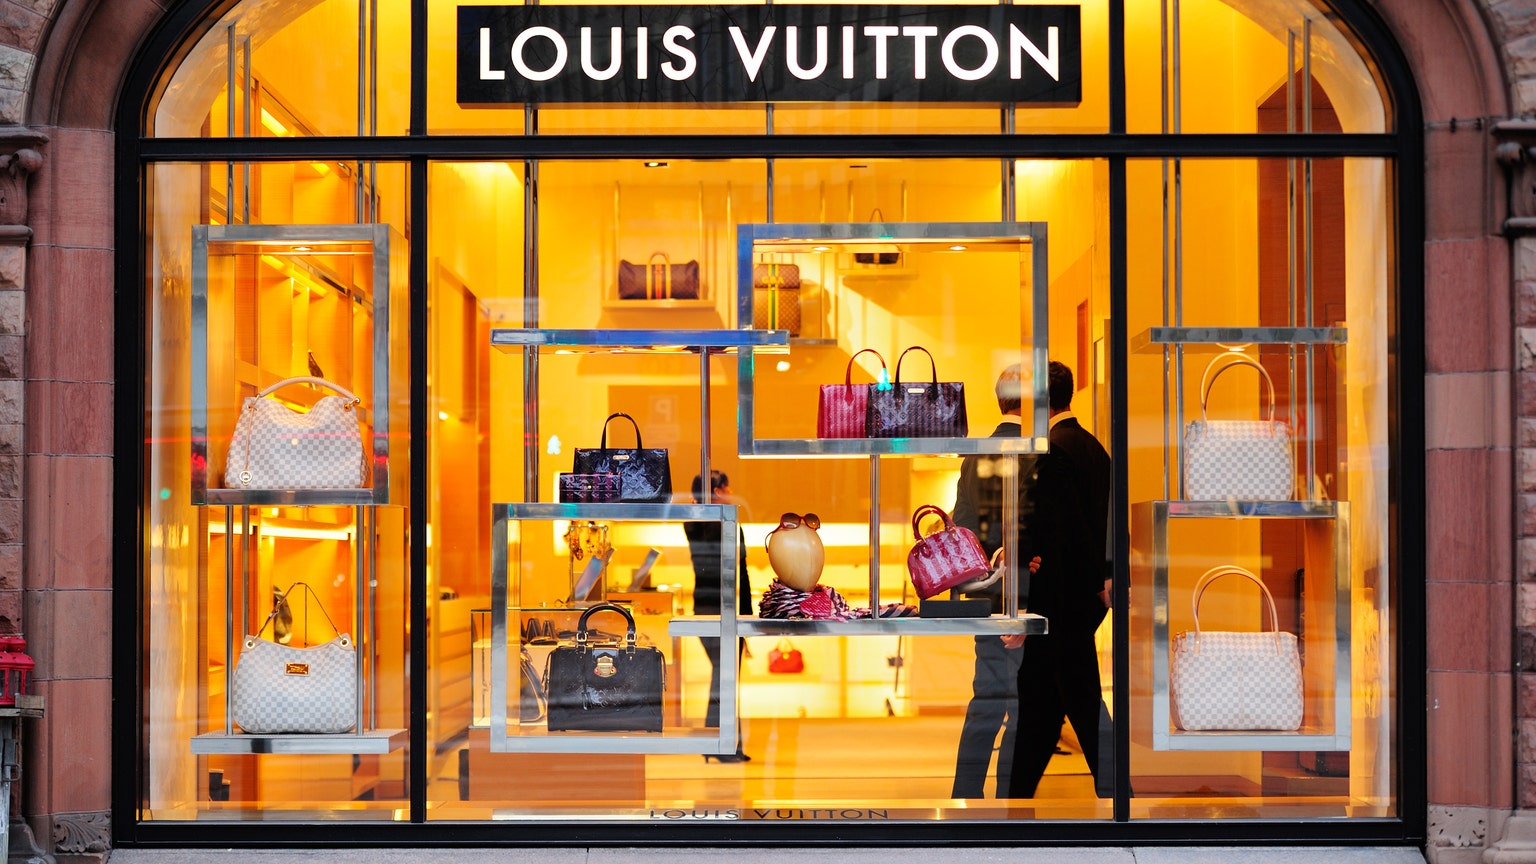 Louis Vuitton Haul // Speedy B 30, Make Up Bag & Pre-Loved Shopping Tips